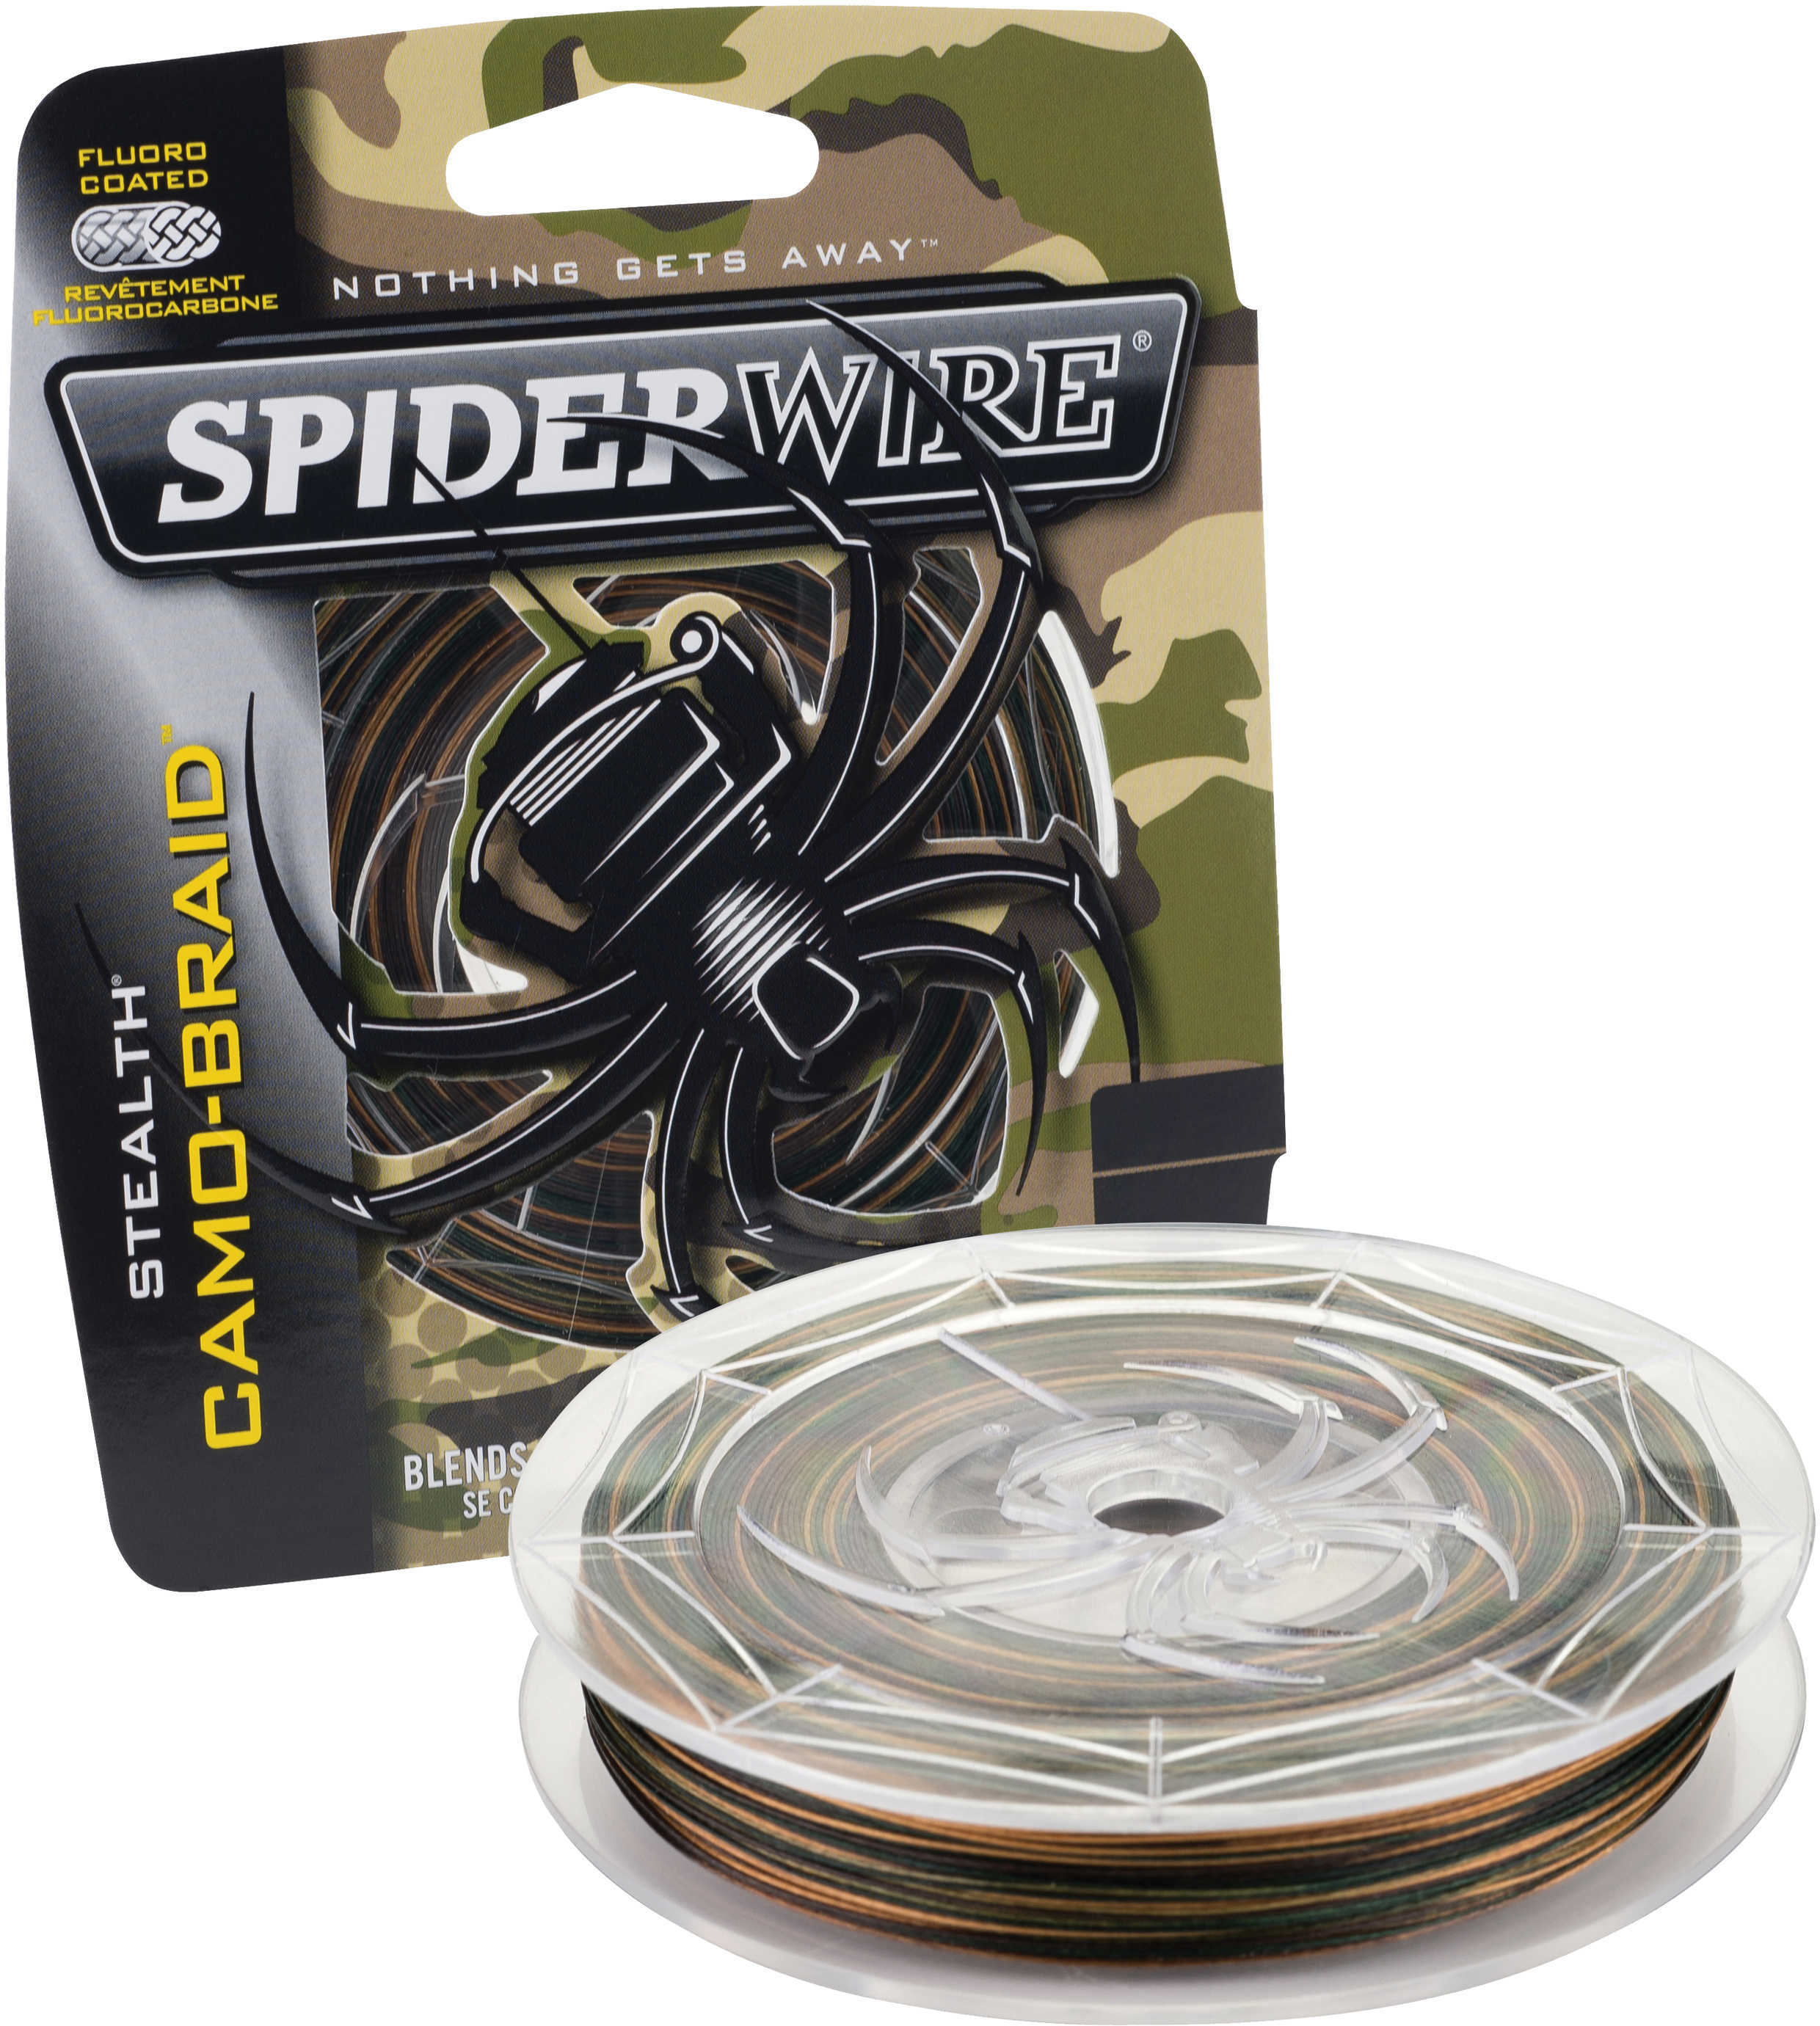 Spiderwire Stealth Braid, Camo 6 lb, 300 Yards Md: 1339791